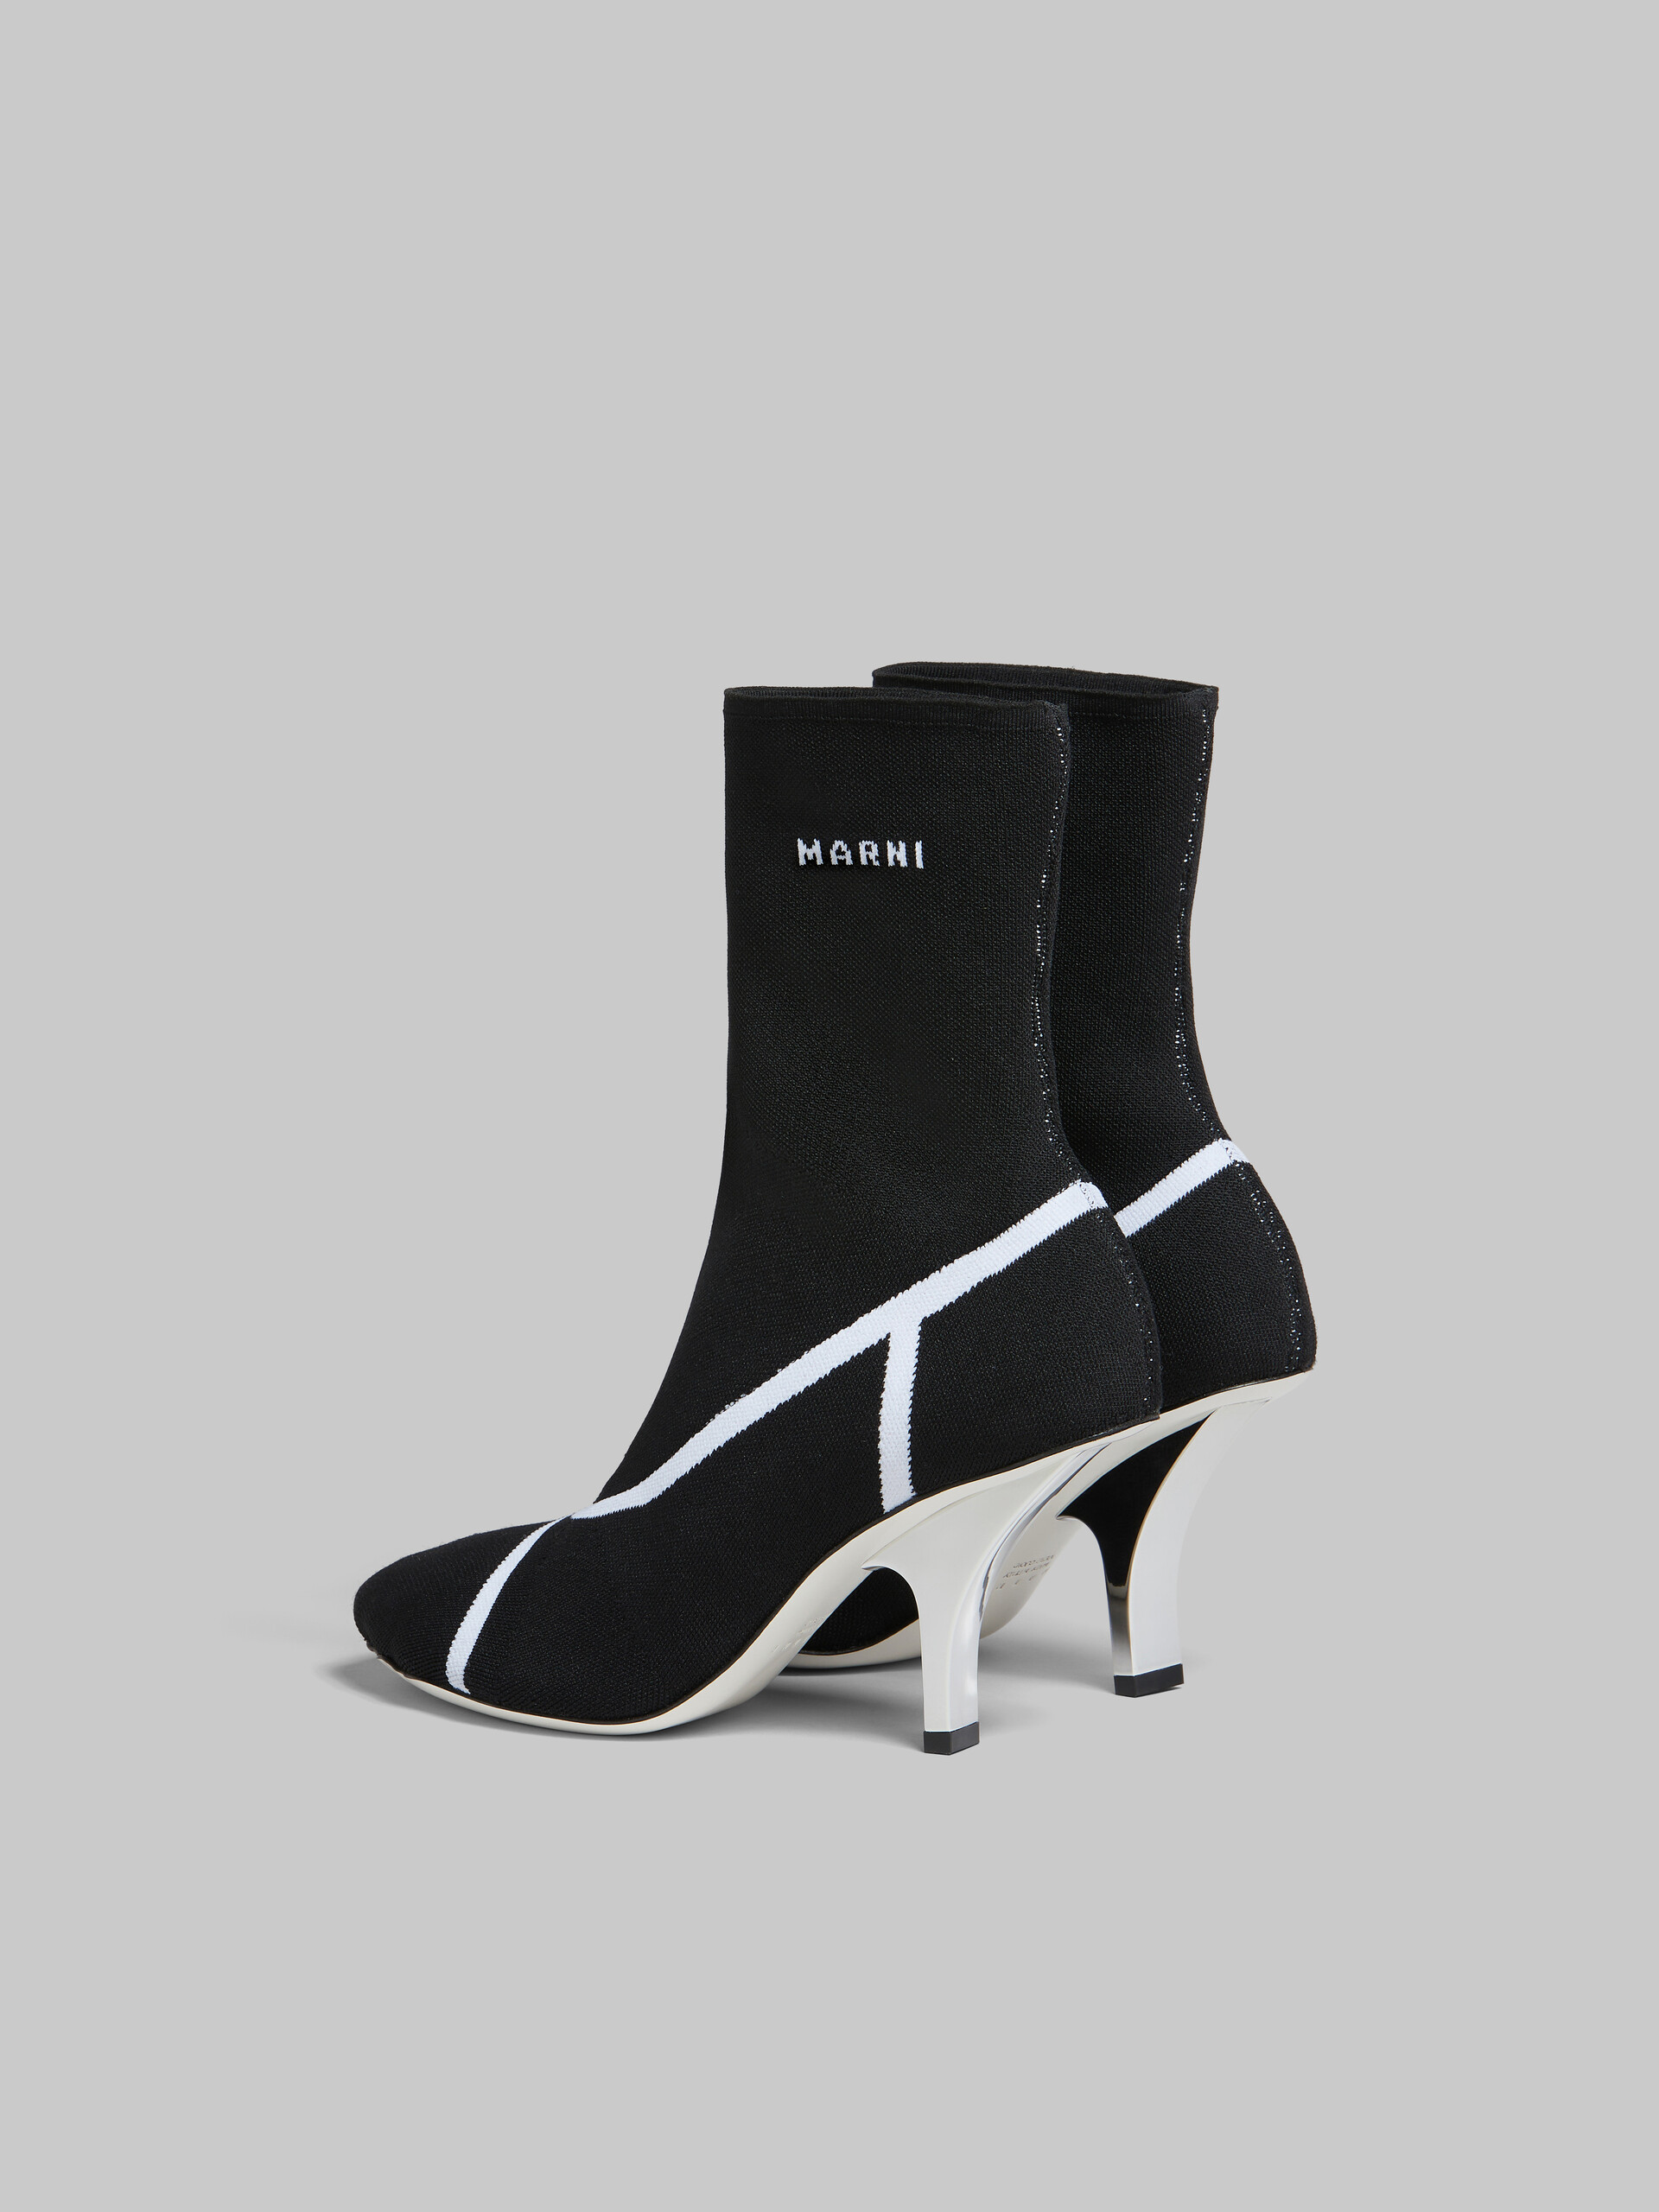 Bota calcetín Fancy de punto elástico negro - Botas - Image 3